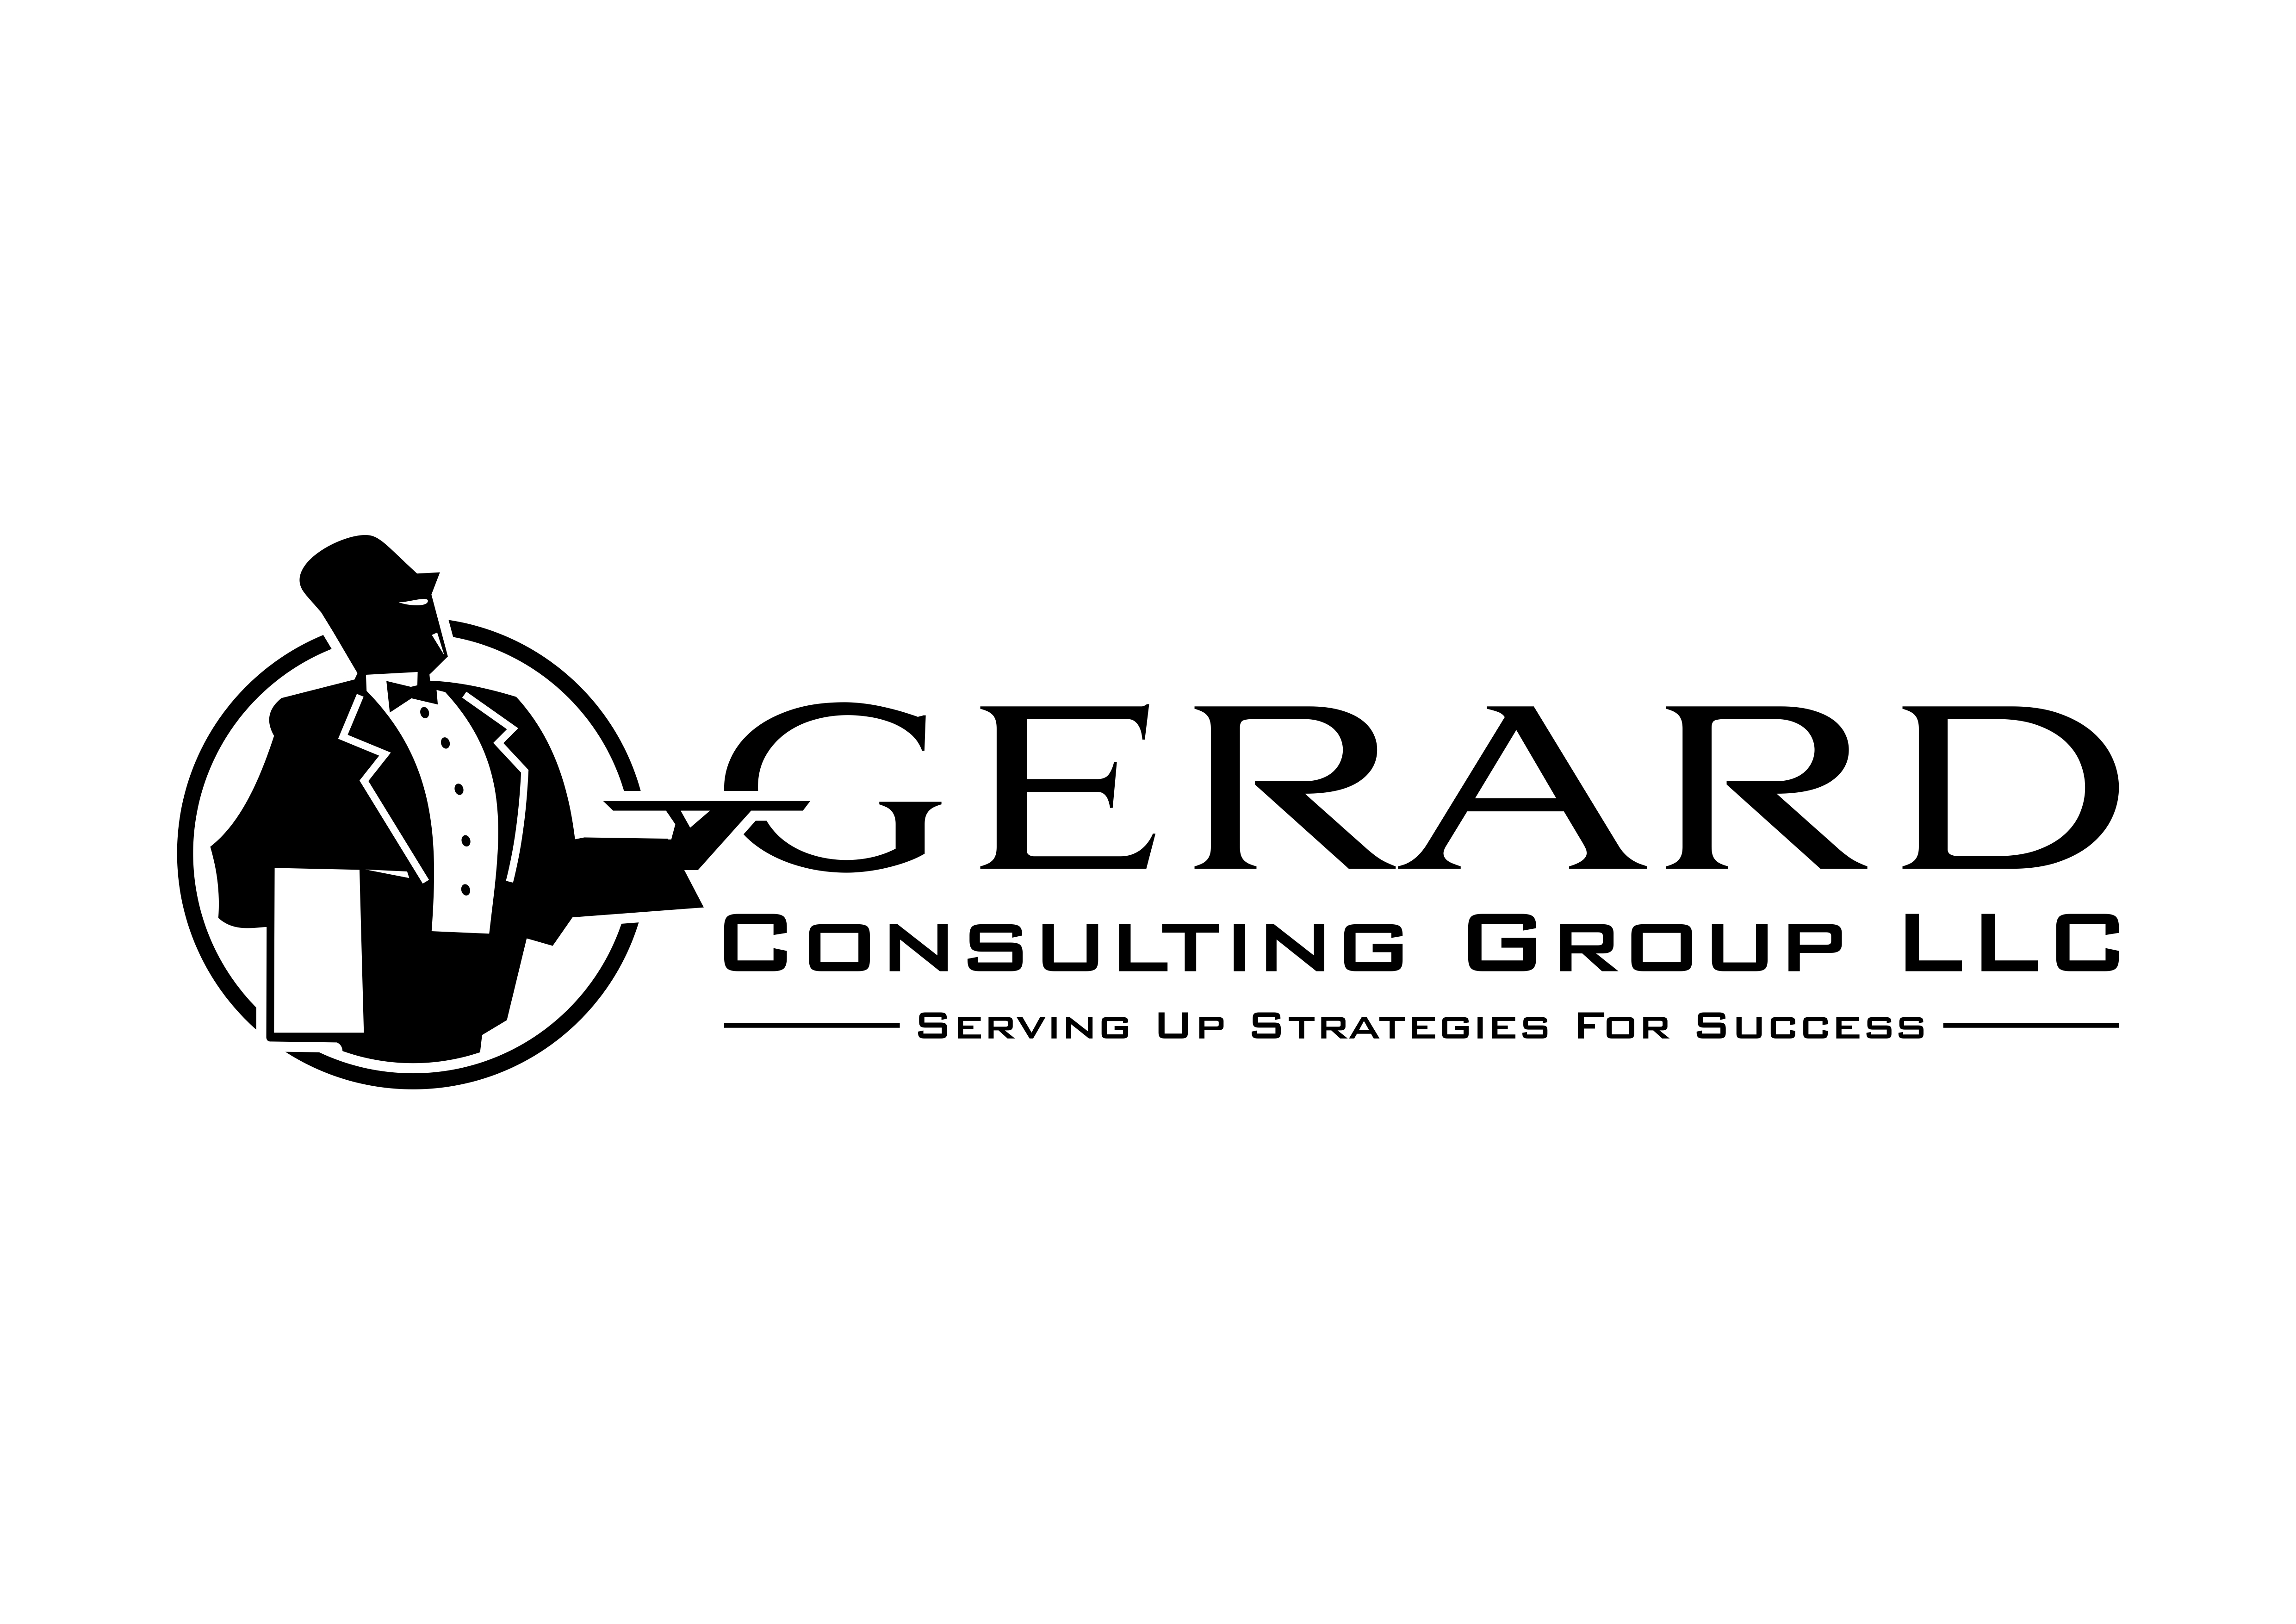 GerardConsulting Group LLC